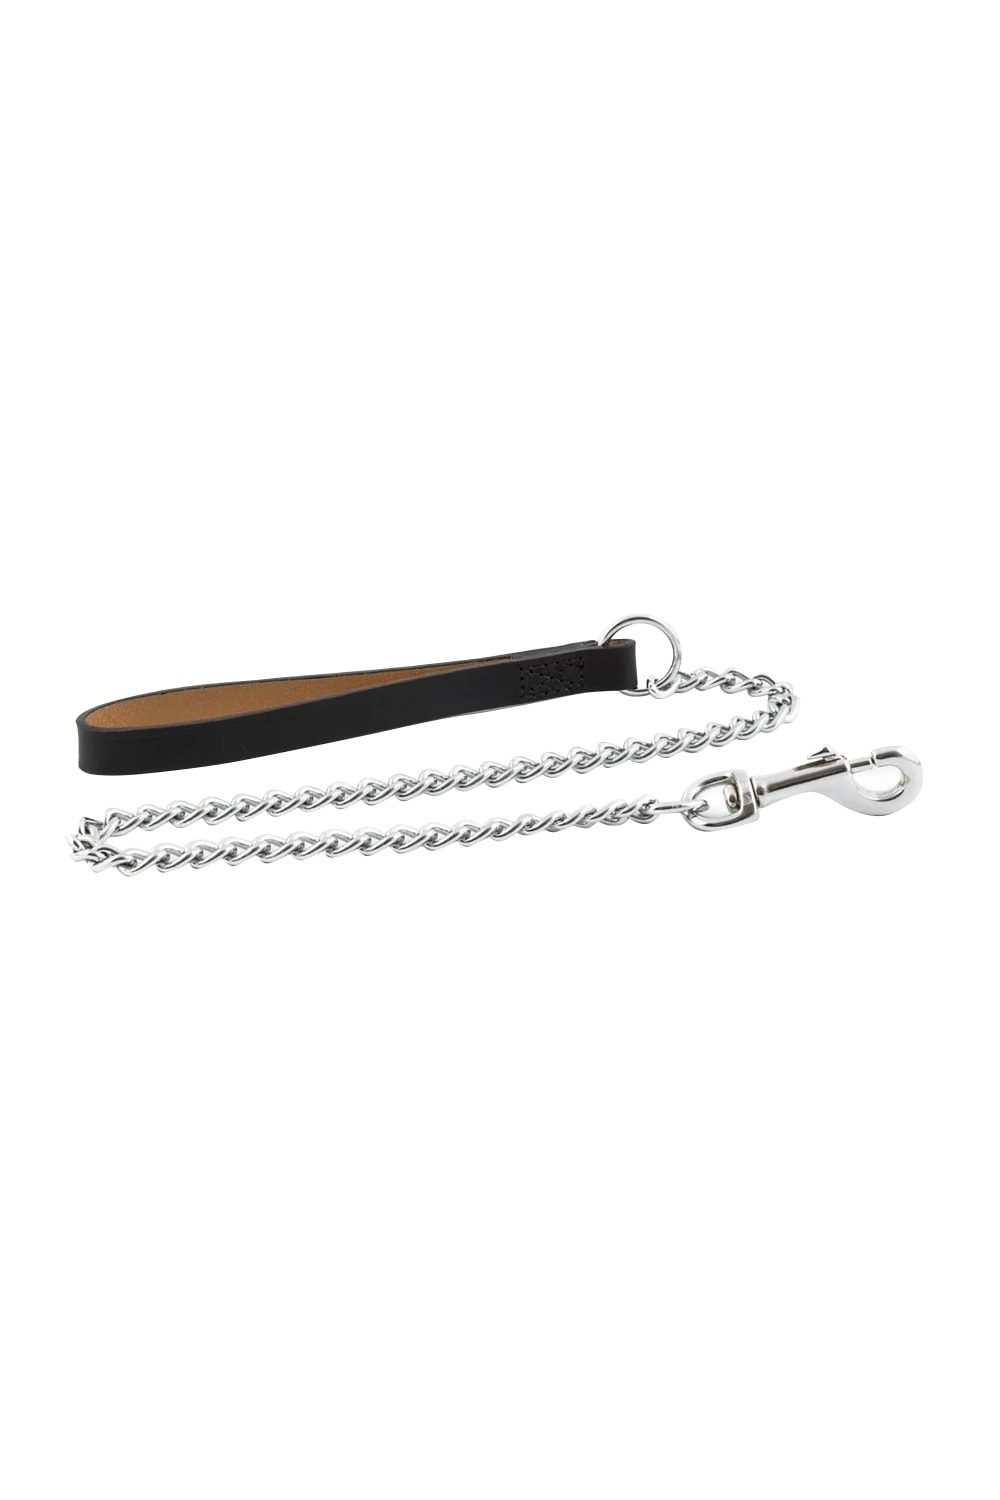 Ancol Chain Medium Leather Dog Lead (Black) (32in)